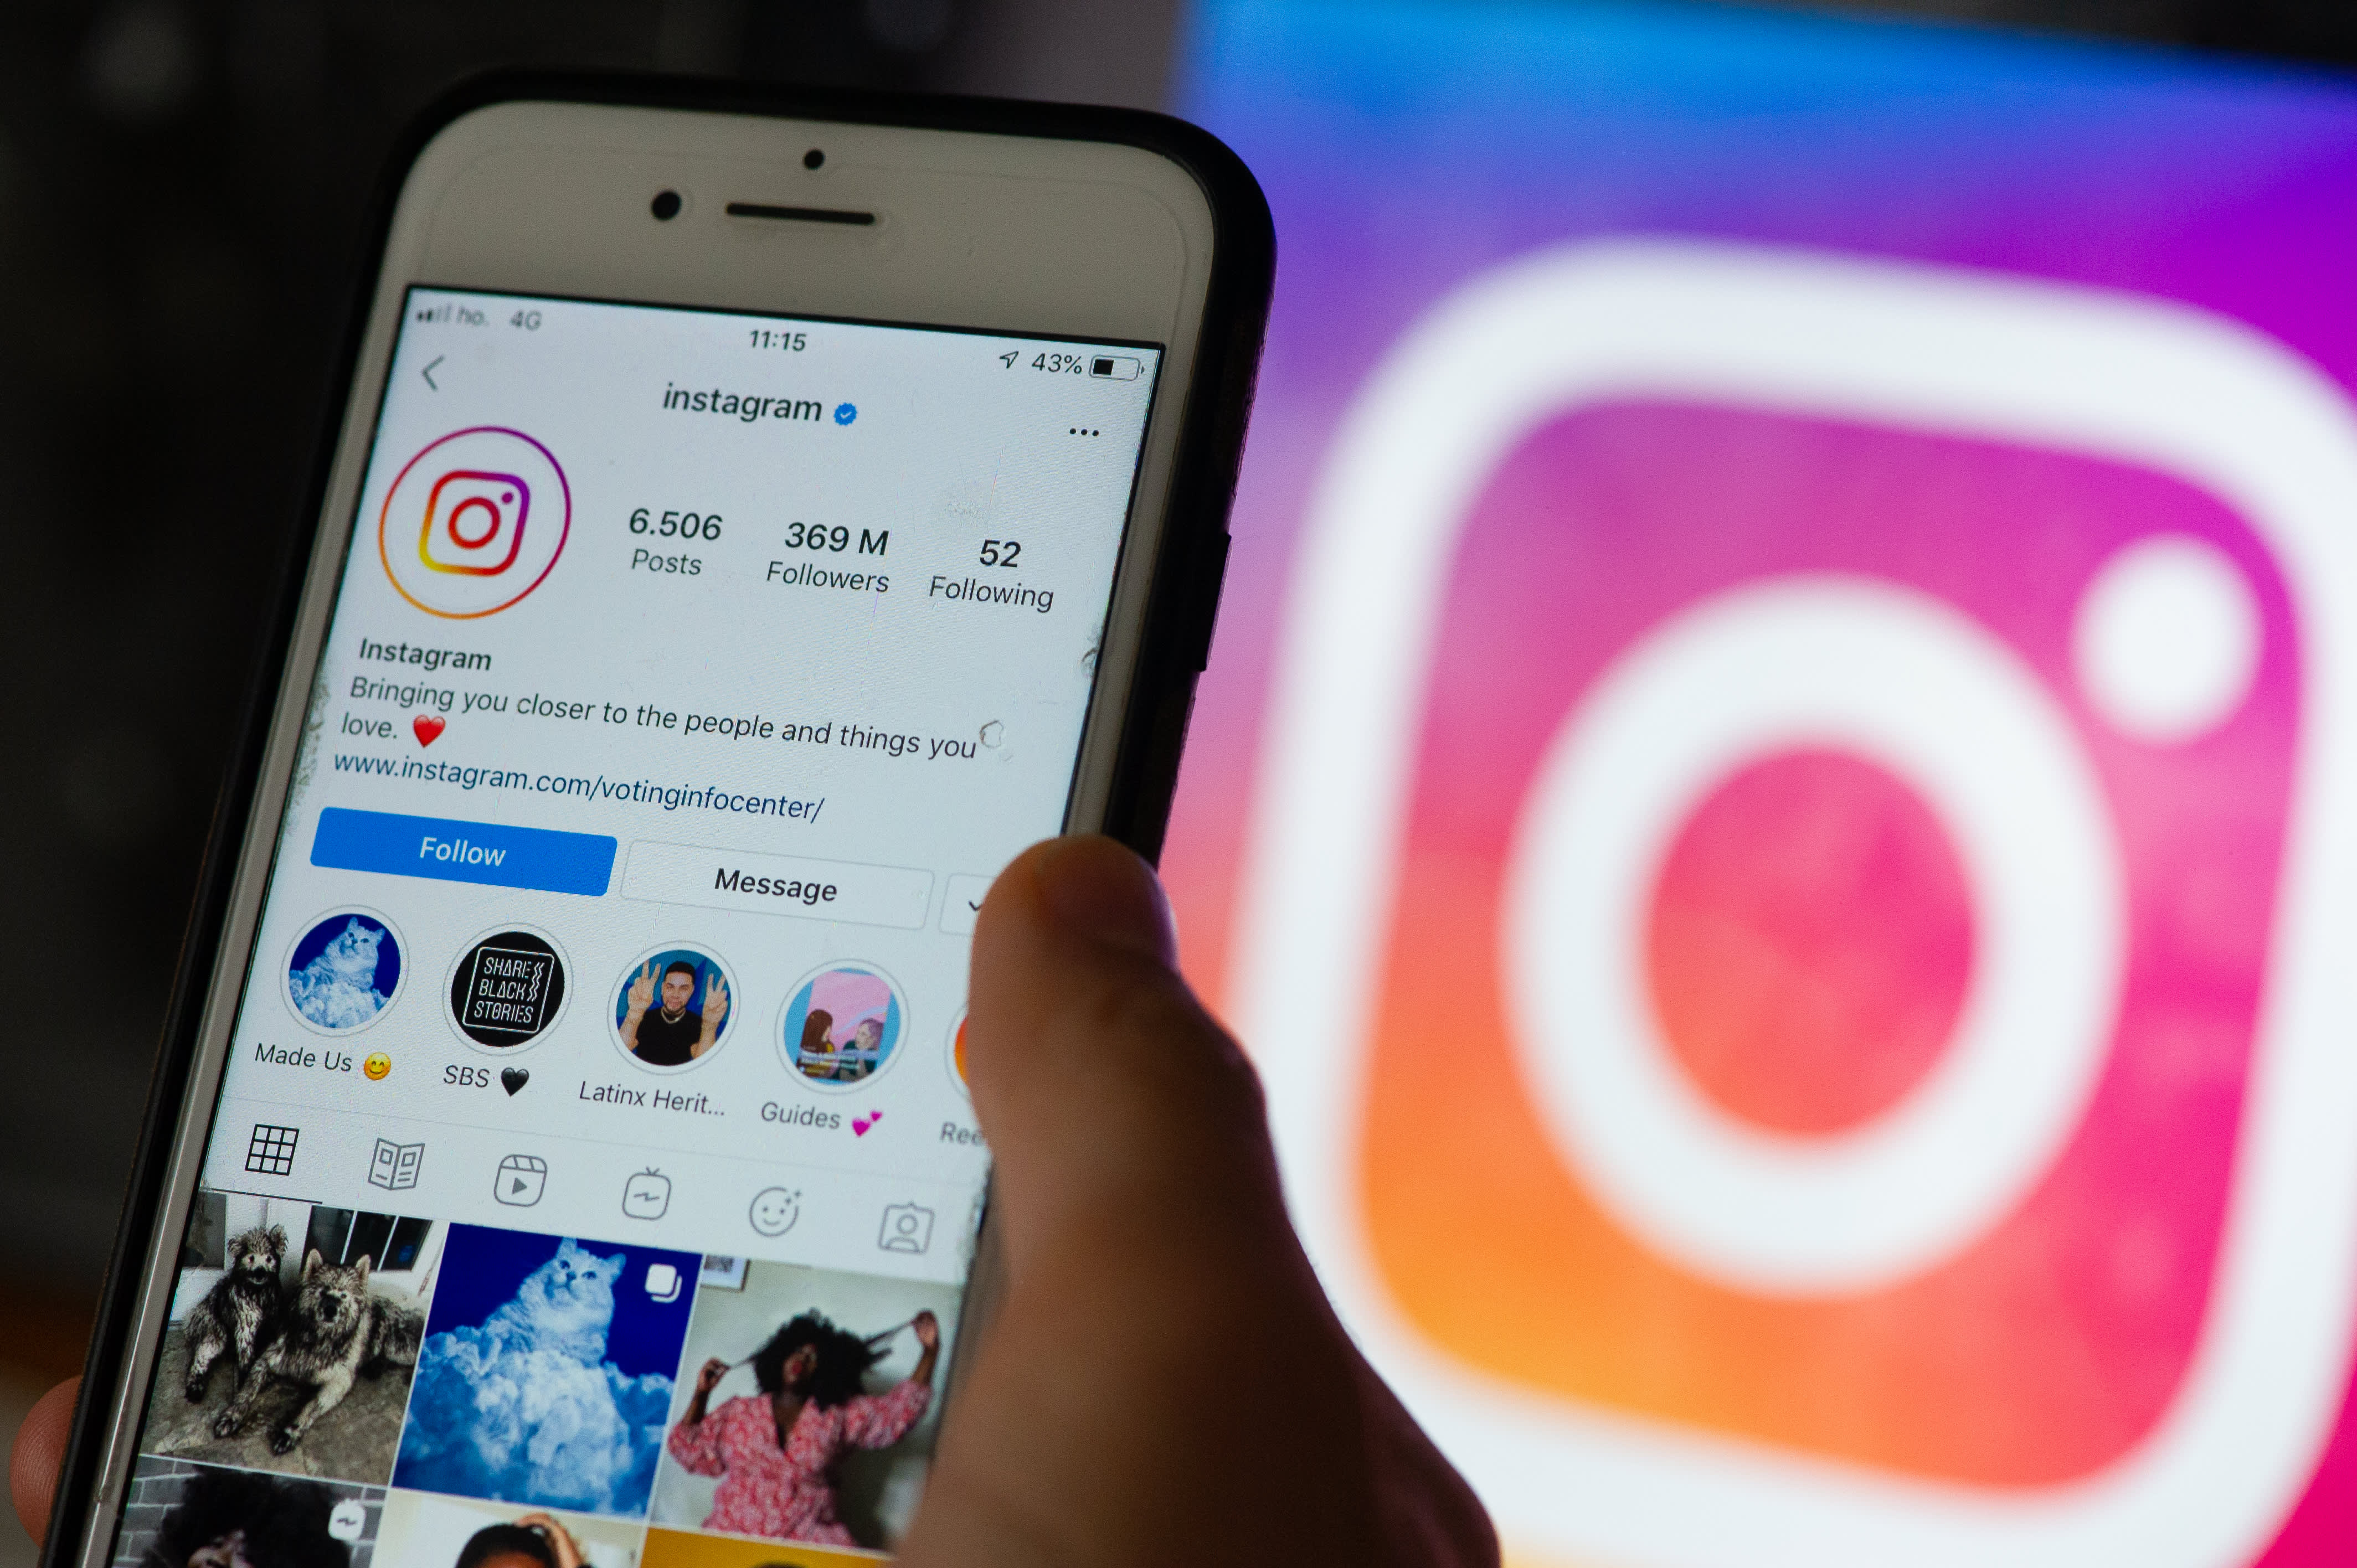 Facebook trains AI to ‘see’ ‘billion’ public Instagram photos